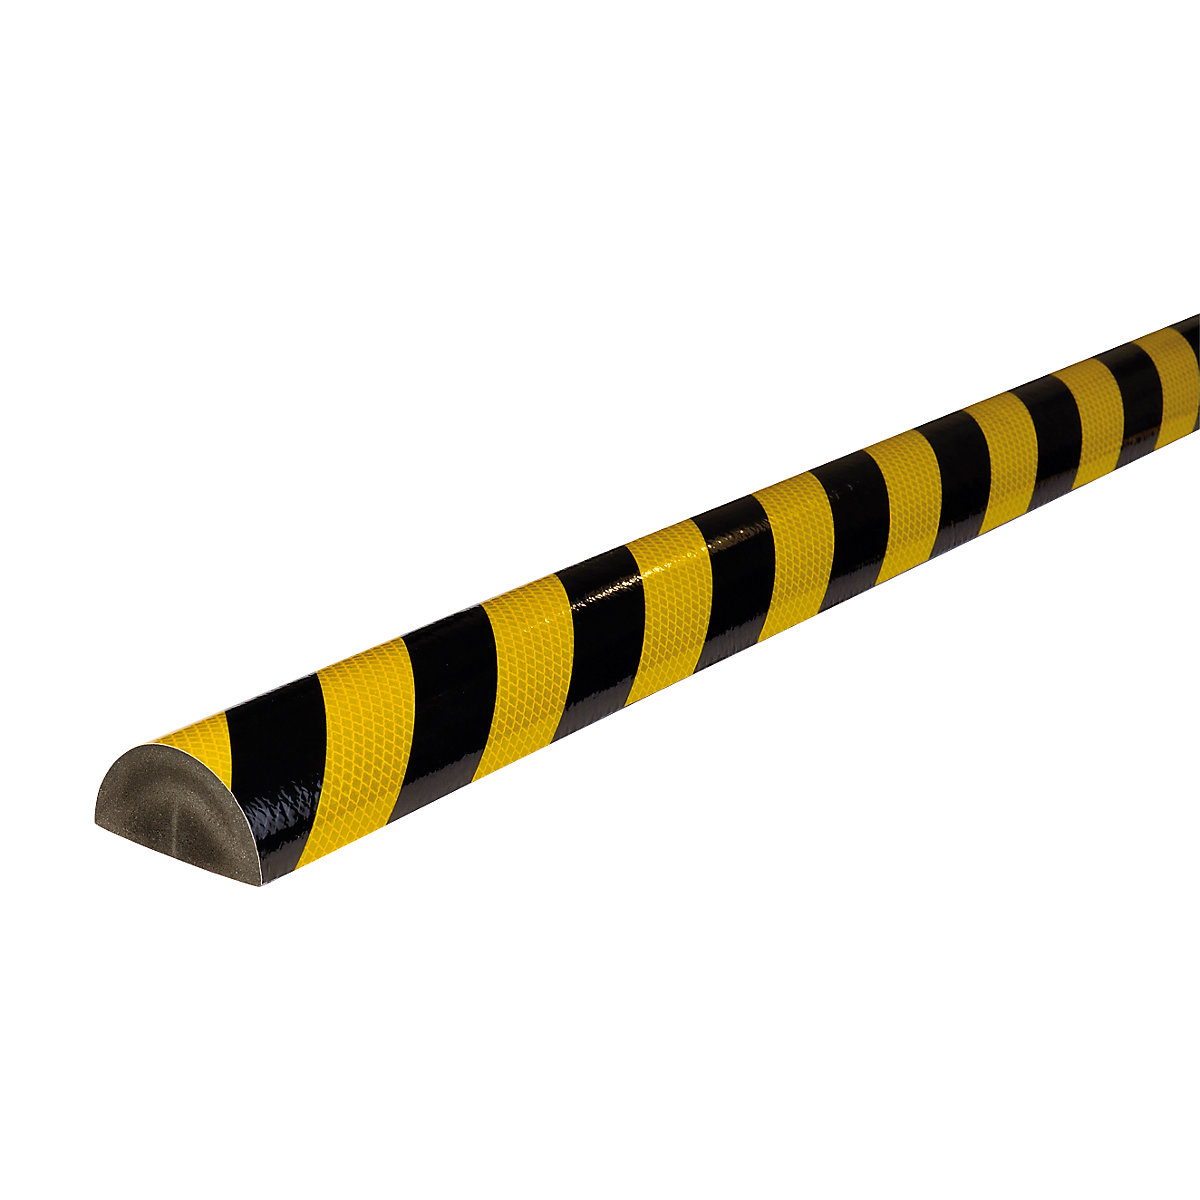 Knuffi® surface protection – SHG, type C+, 1 m piece, yellow / black, reflective-20